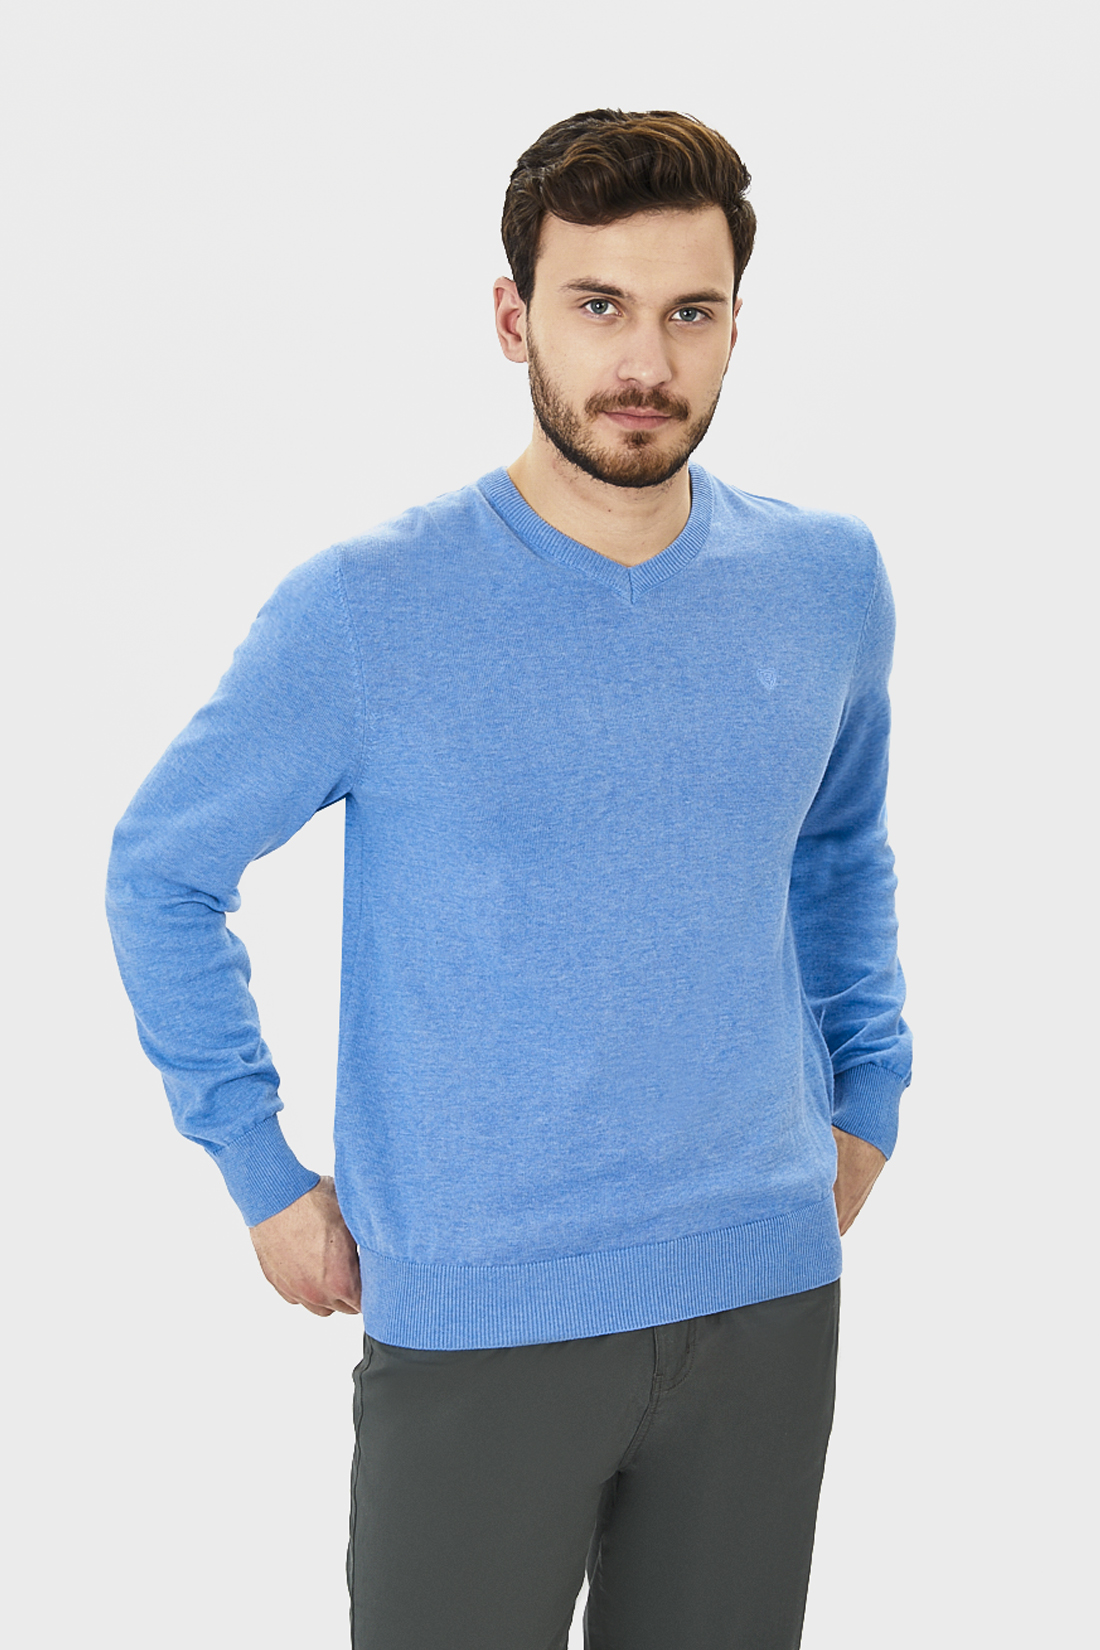 Базовый пуловер с хлопком (арт. baon B631201), размер 3XL, цвет белый Базовый пуловер с хлопком (арт. baon B631201) - фото 1